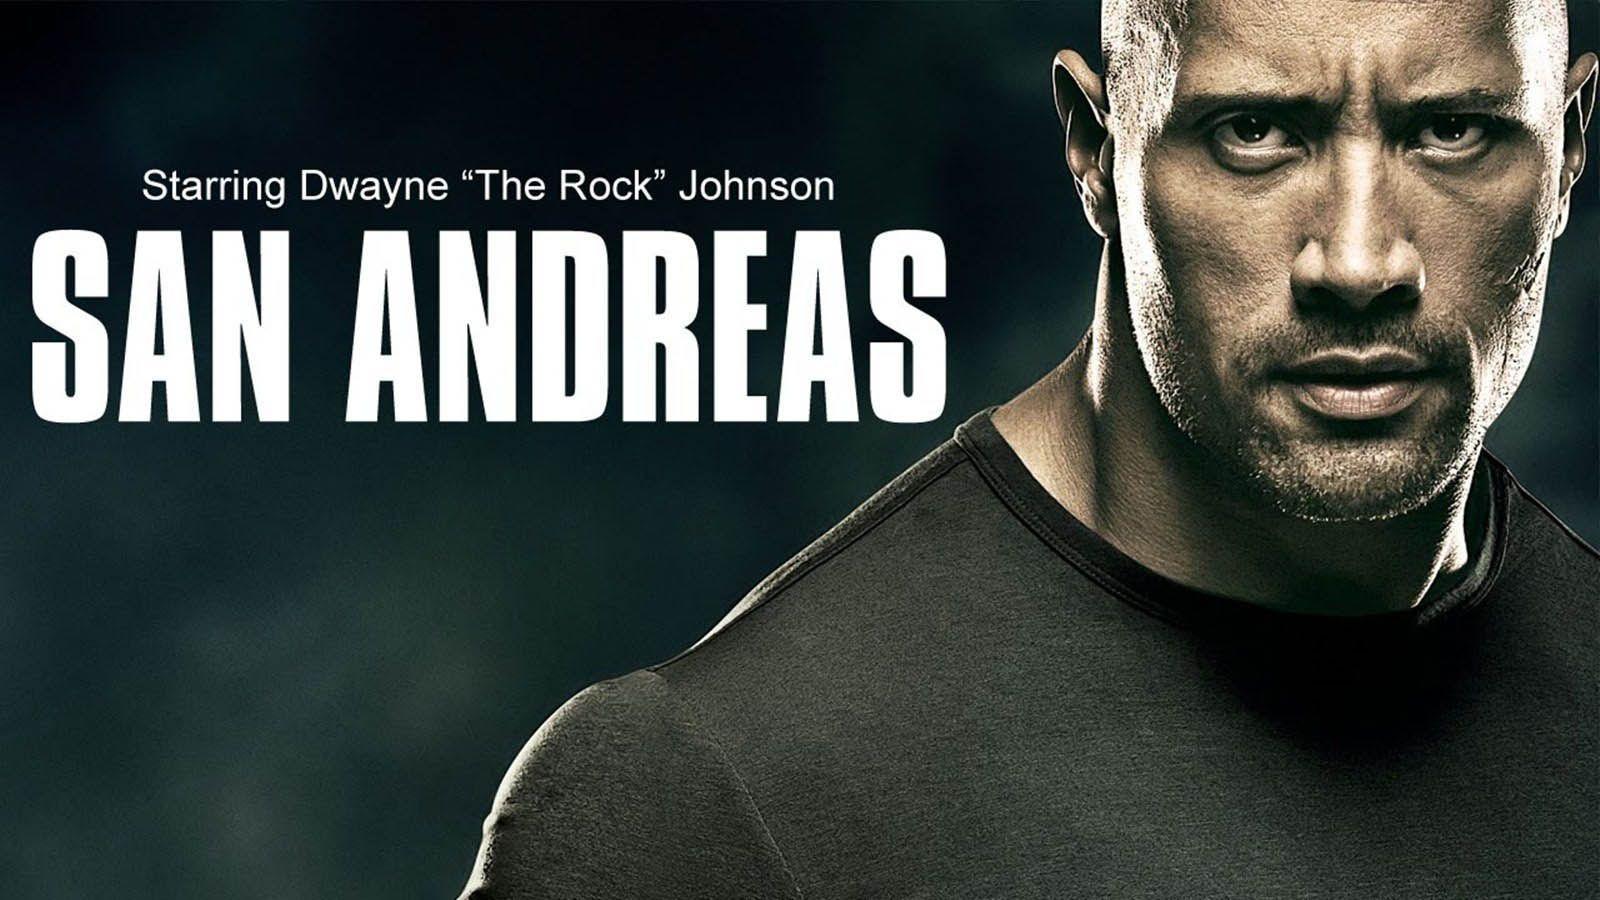 San Andreas starring Dwayne The Rock Johnson